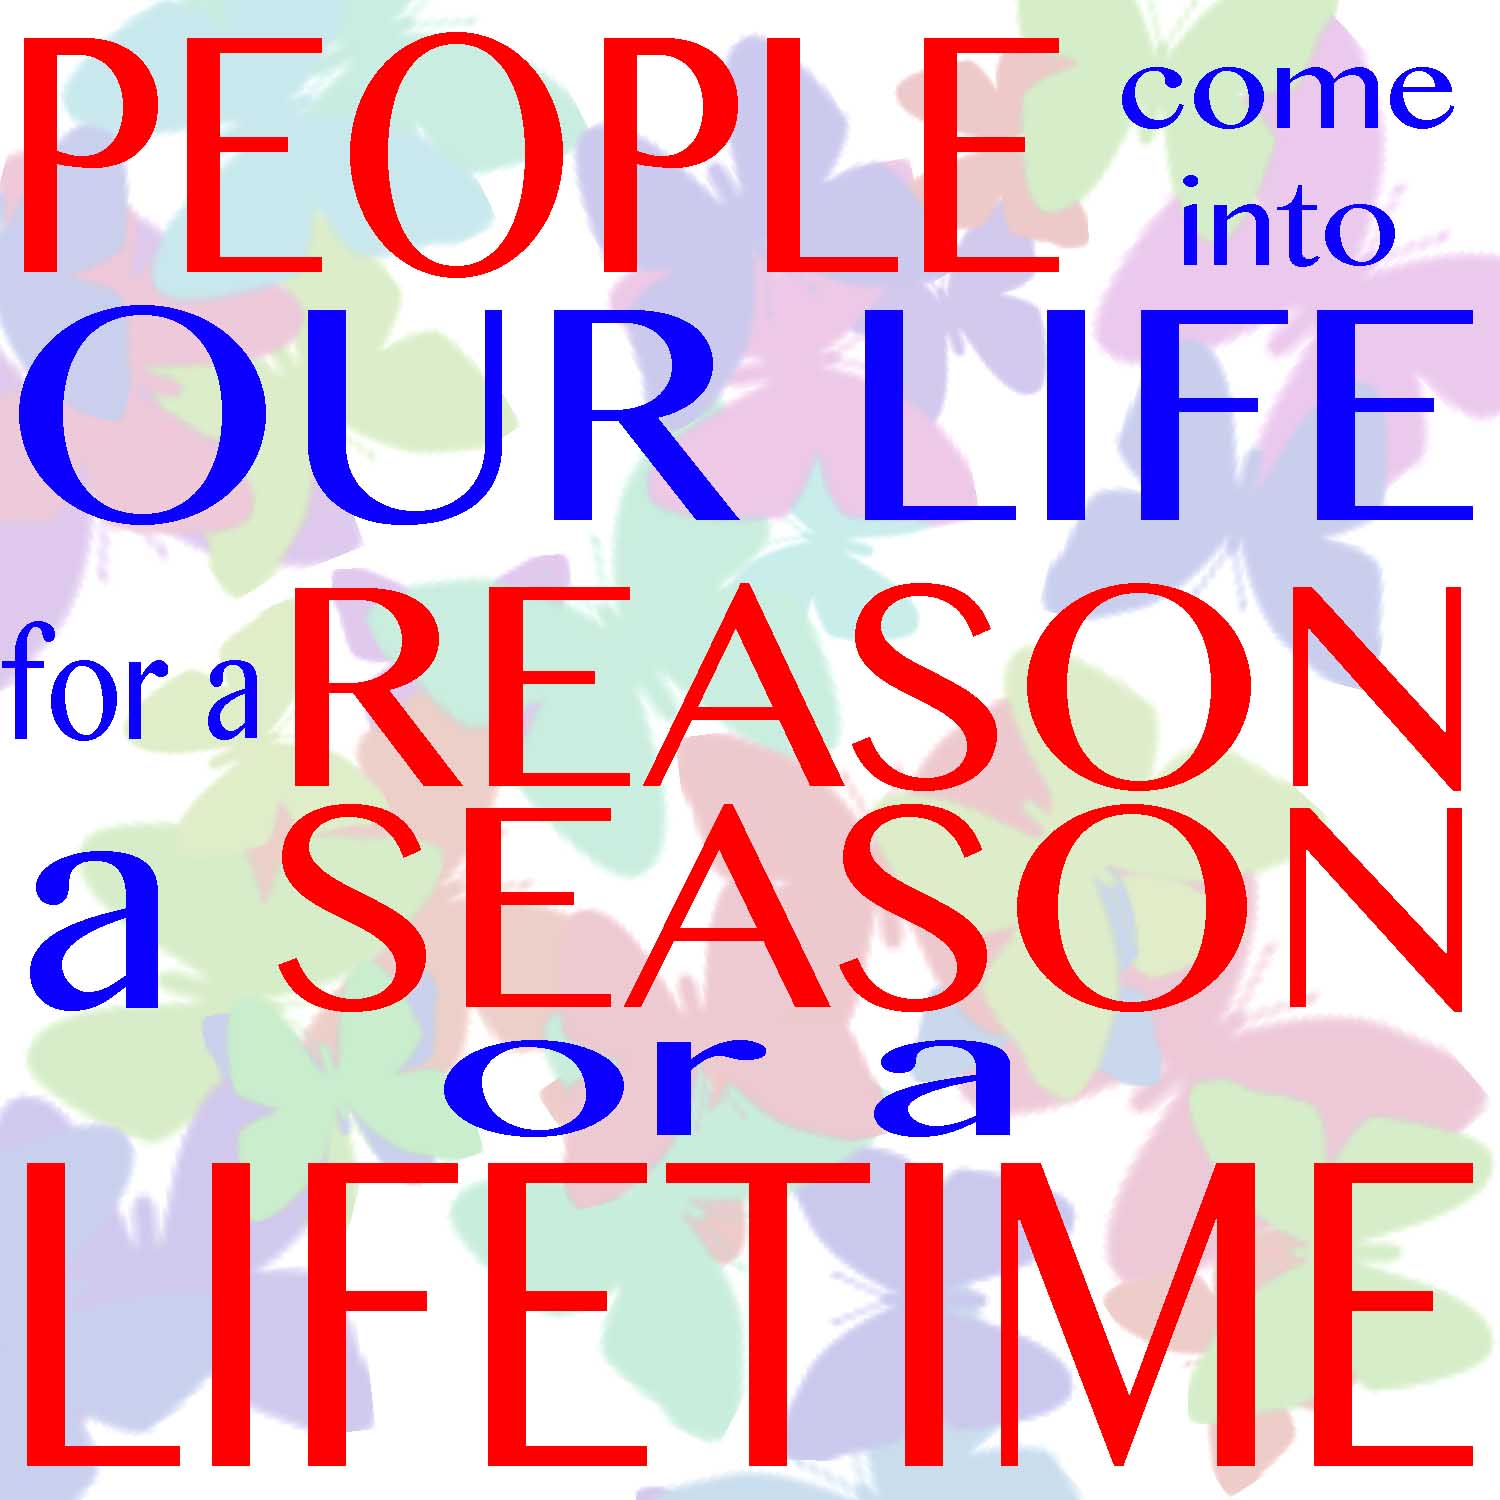 Friend Quote Reason Season Lifetime People e into your life for a reason season or